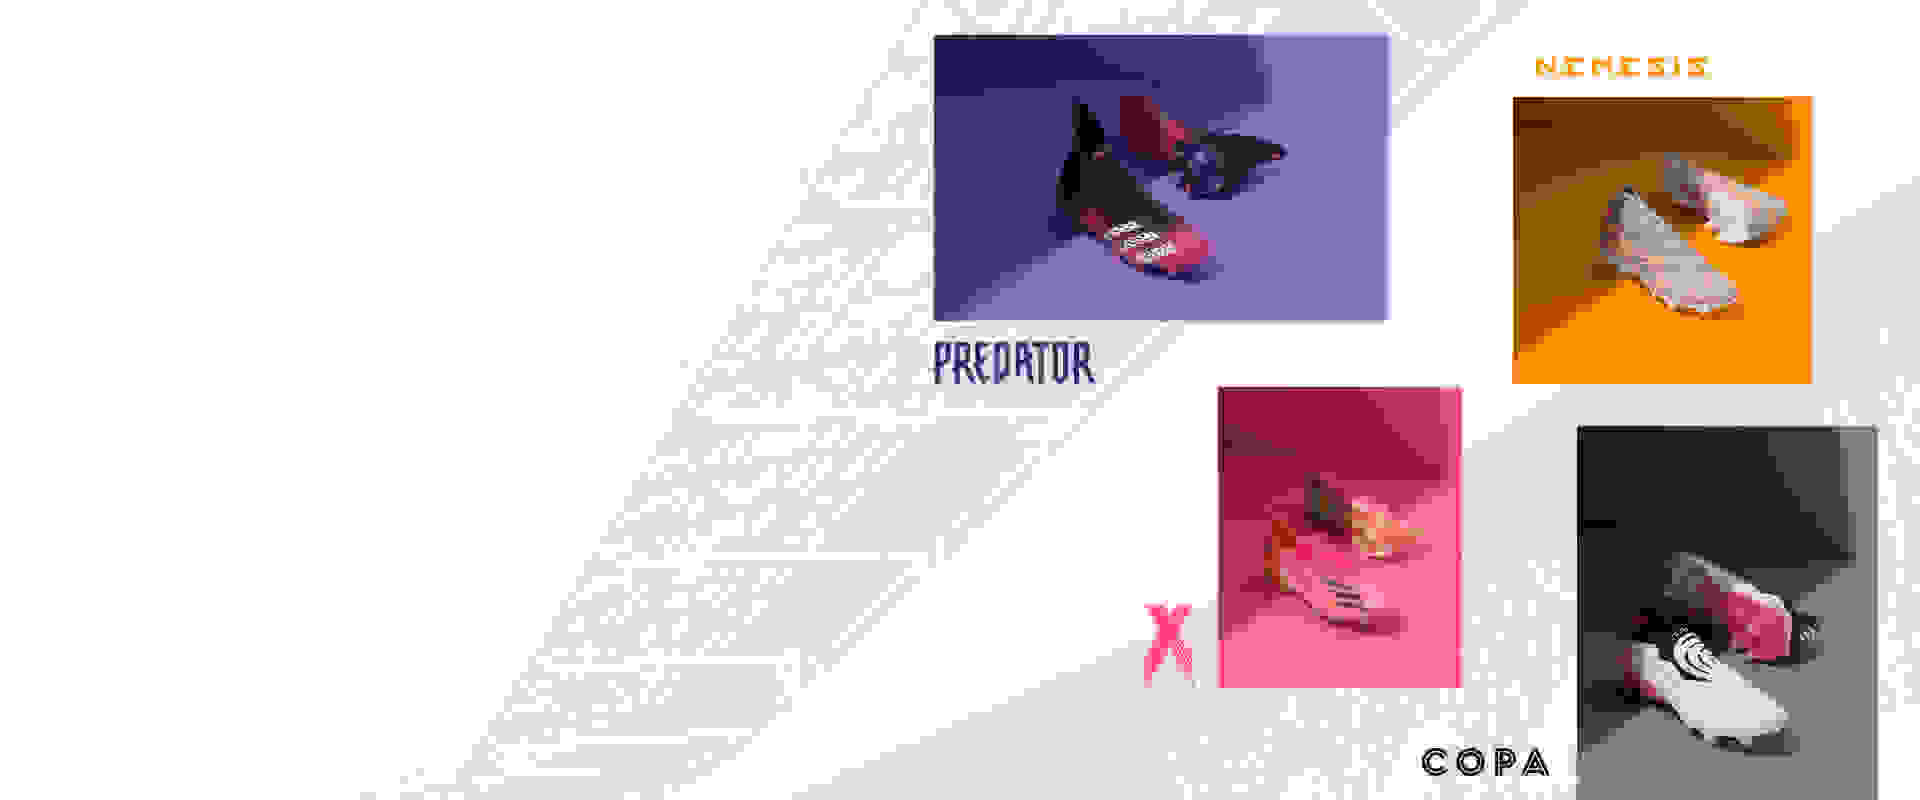 Image featuring the Predator, Nemeziz, X and Copa boots.